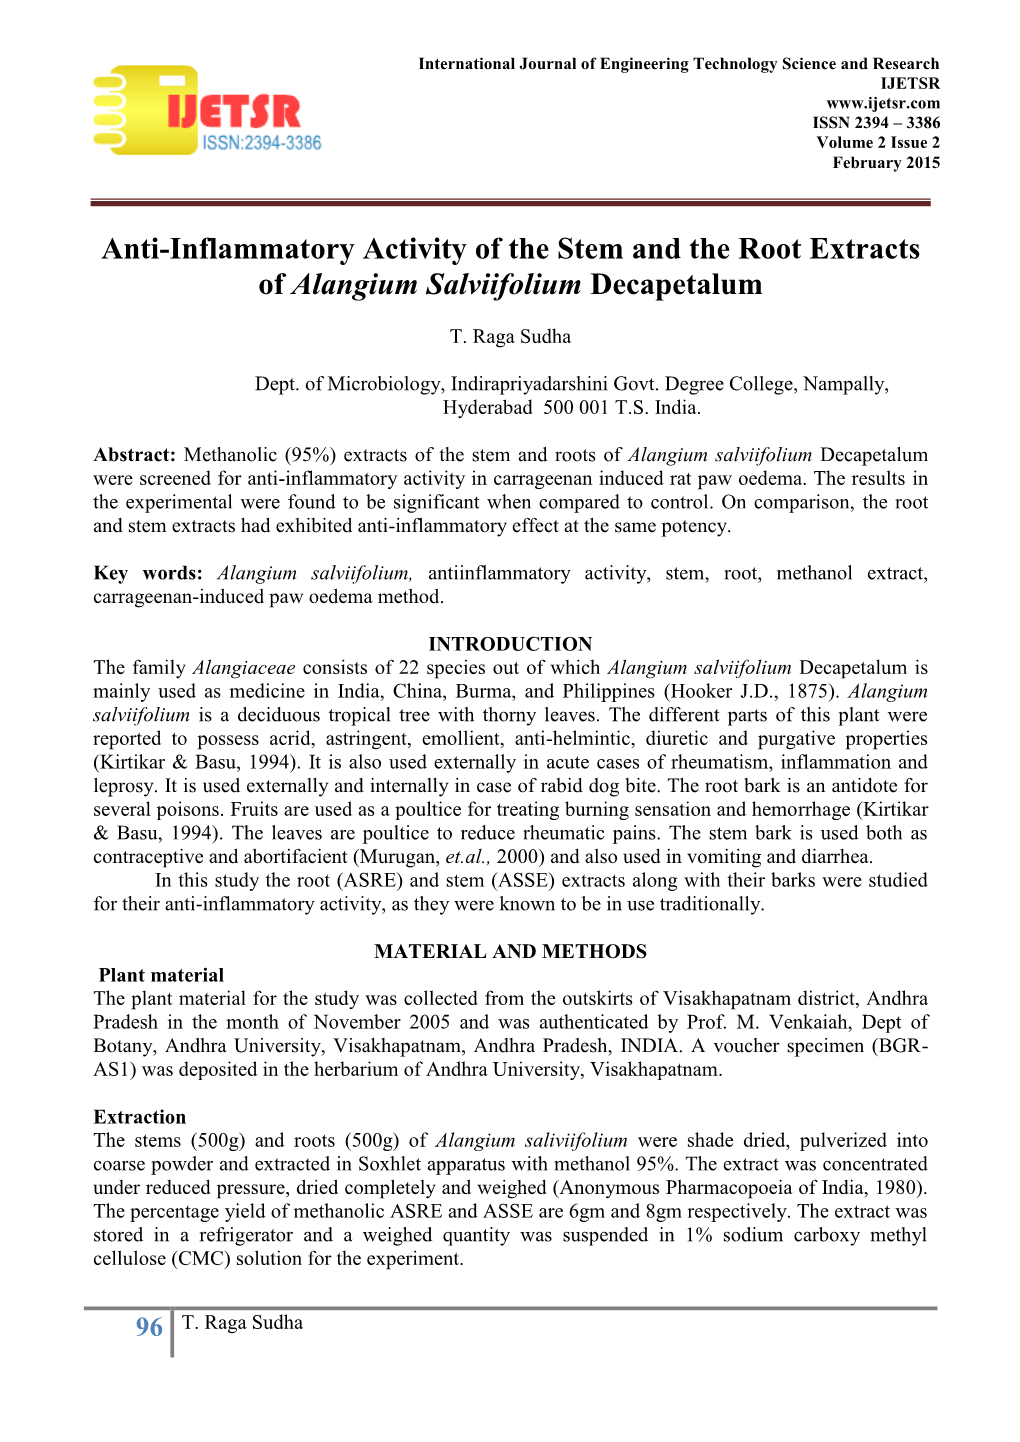 Anti-Inflammatory Activity of Stem and Root Extracts of Alangium Salviifolium Decapetalum